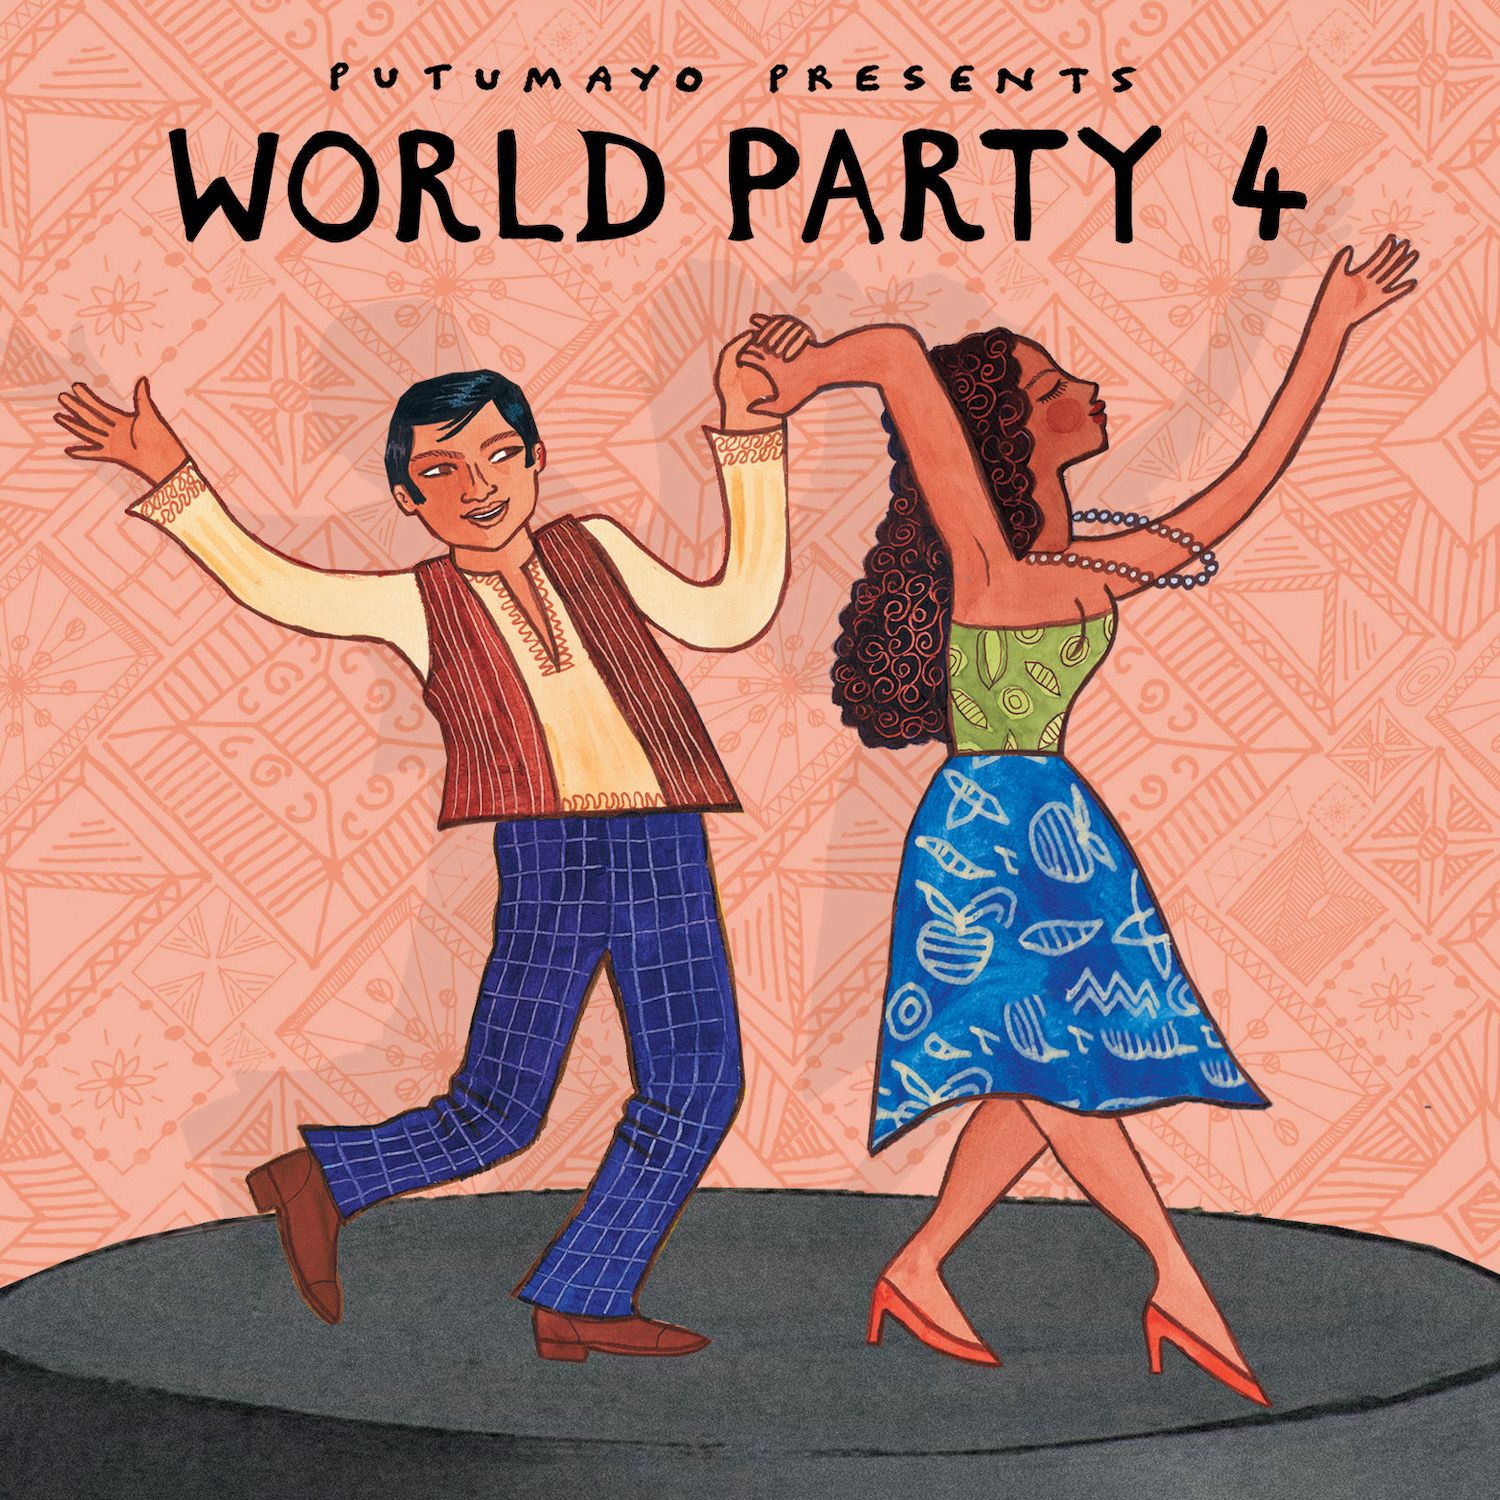 Putumayo presents World Party 4